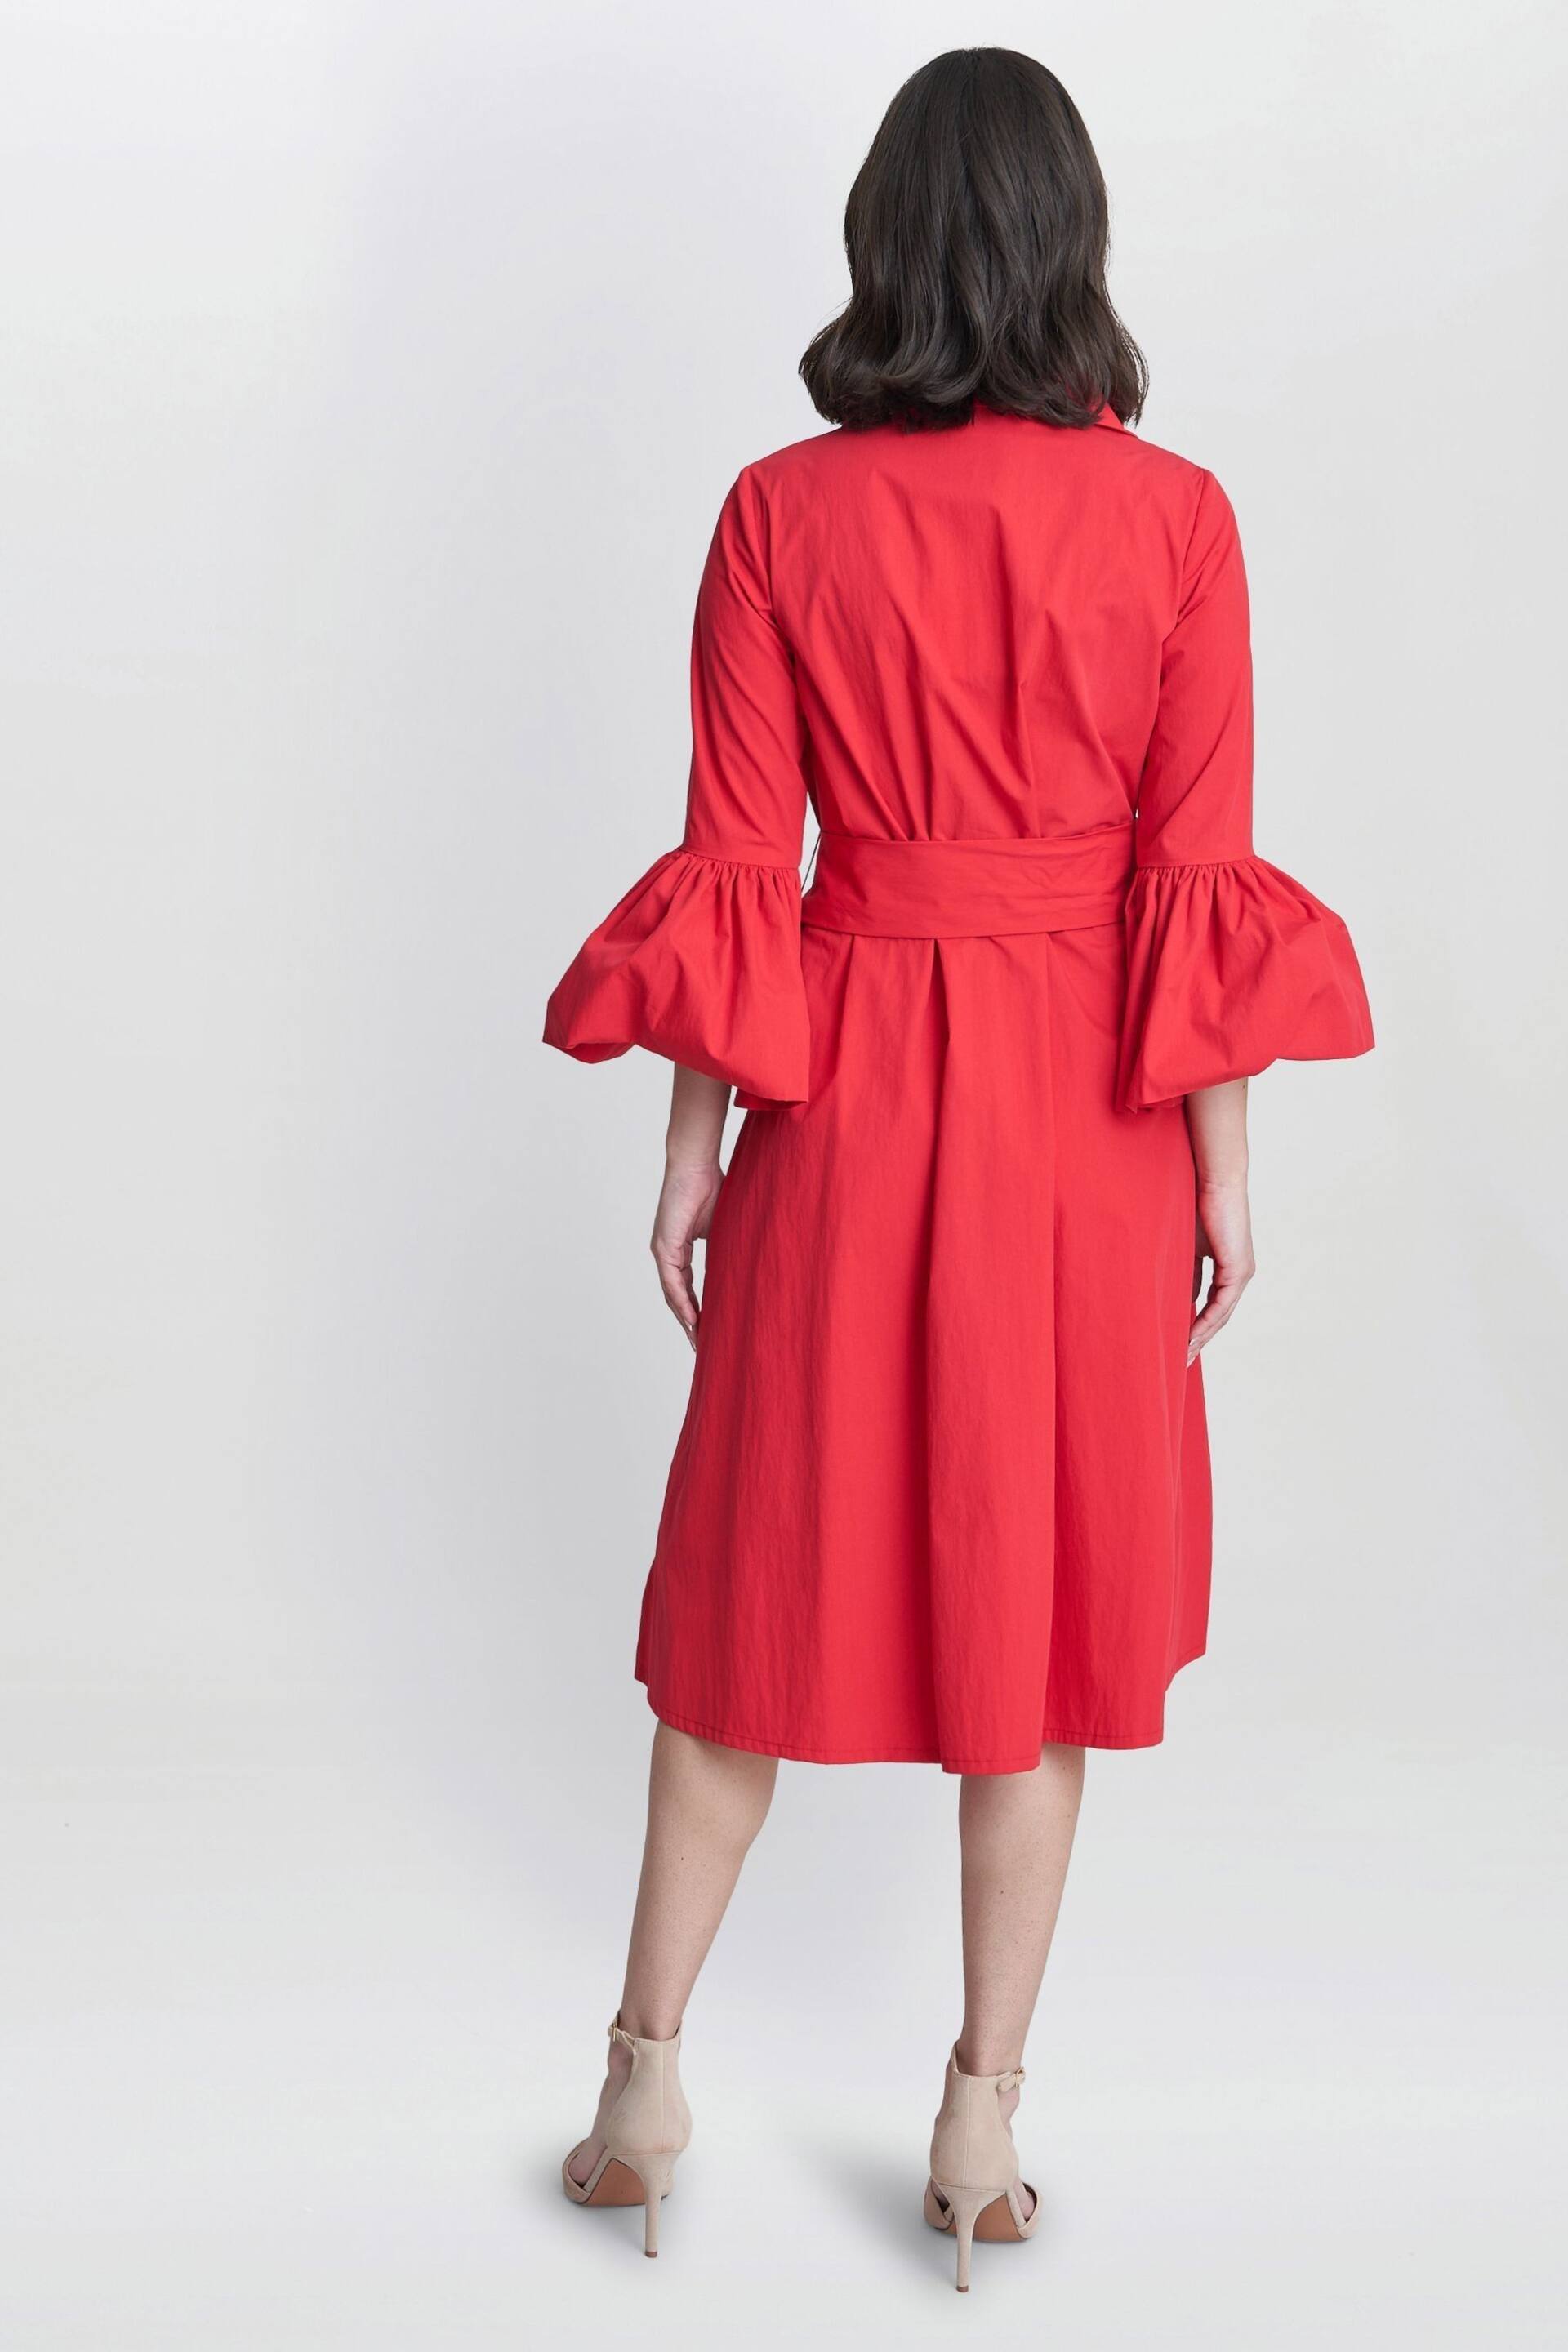 Gina Bacconi Red Melinda Taffeta Shirt Dress - Image 2 of 6